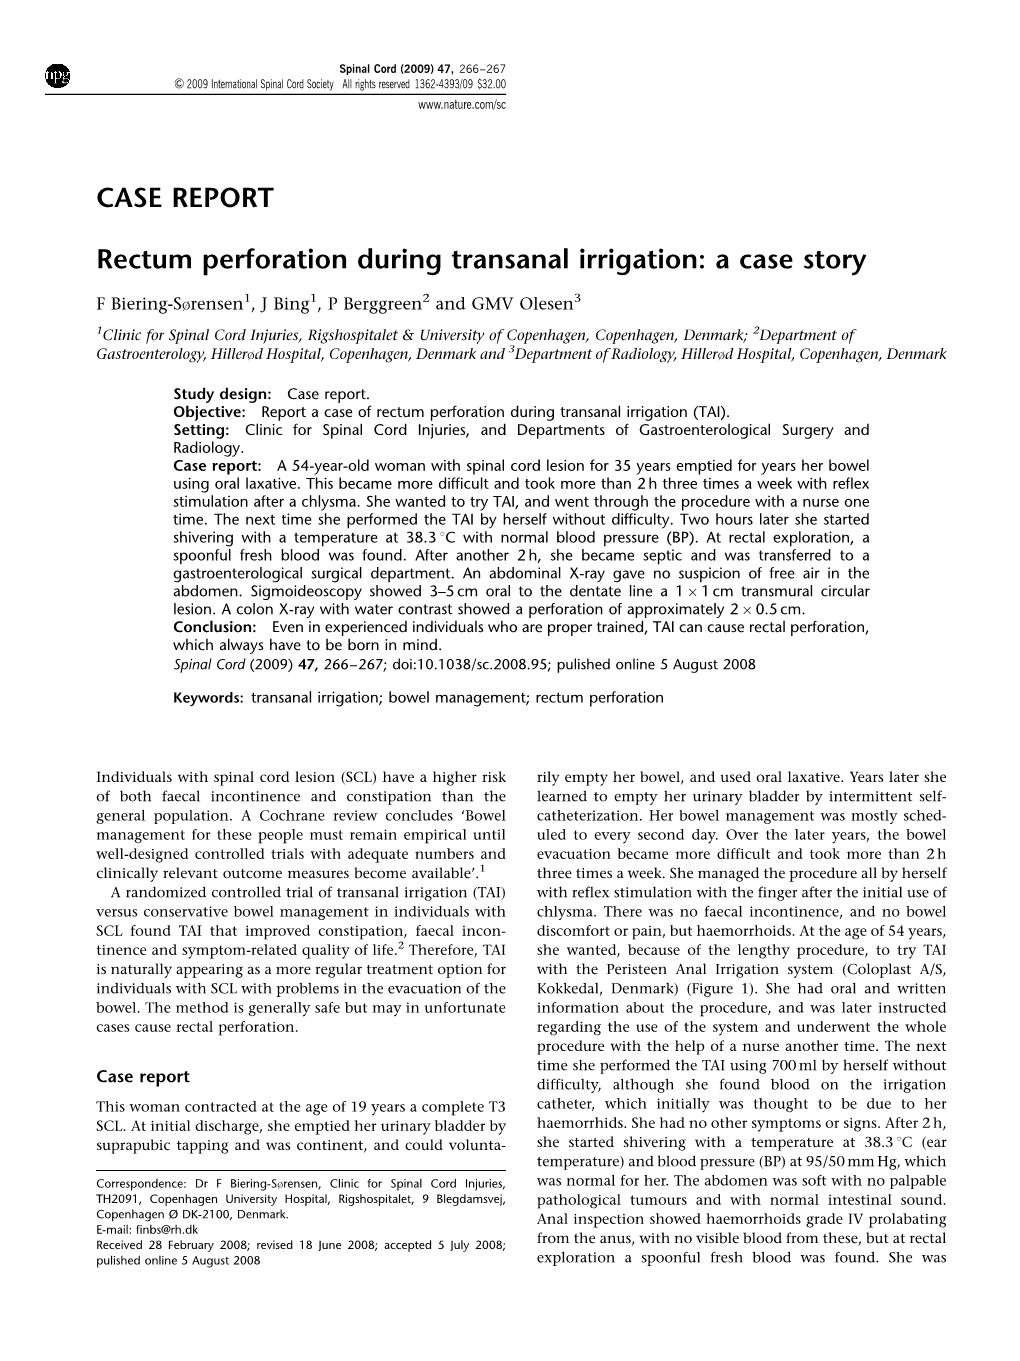 CASE REPORT Rectum Perforation During Transanal Irrigation